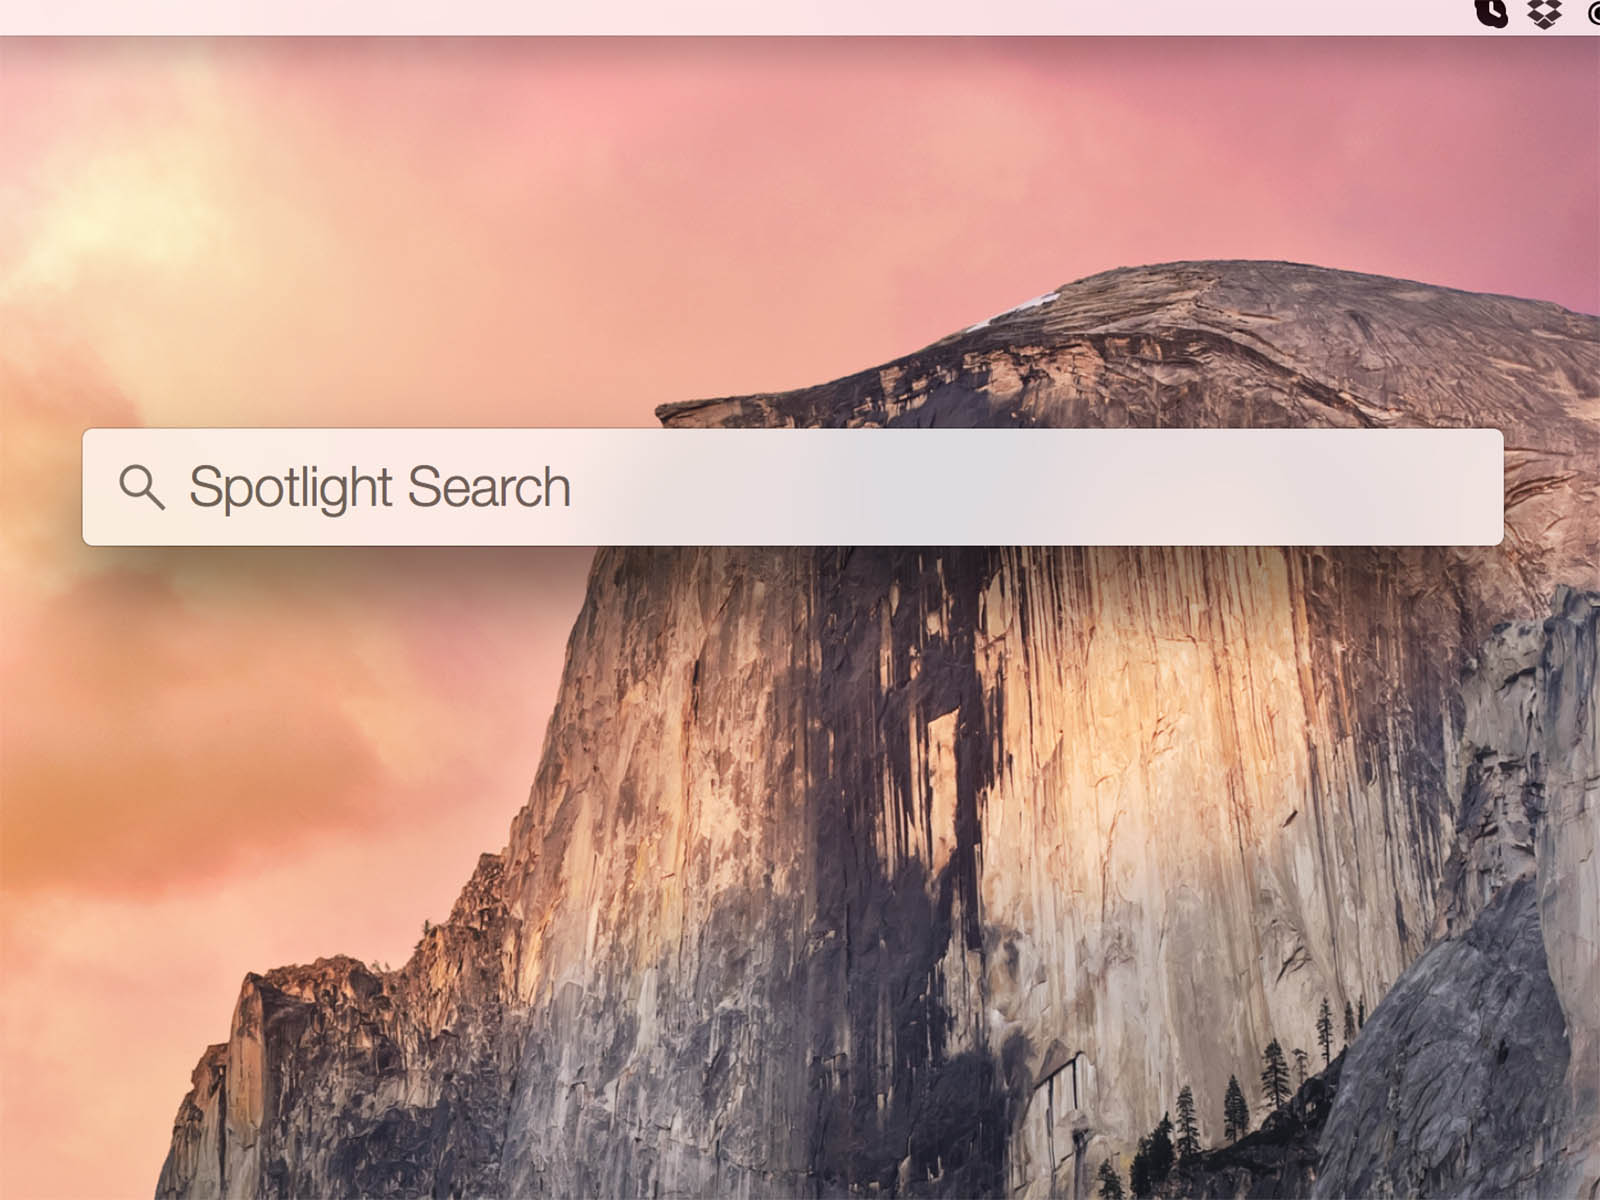 OS X Yosemite Spotlight Search